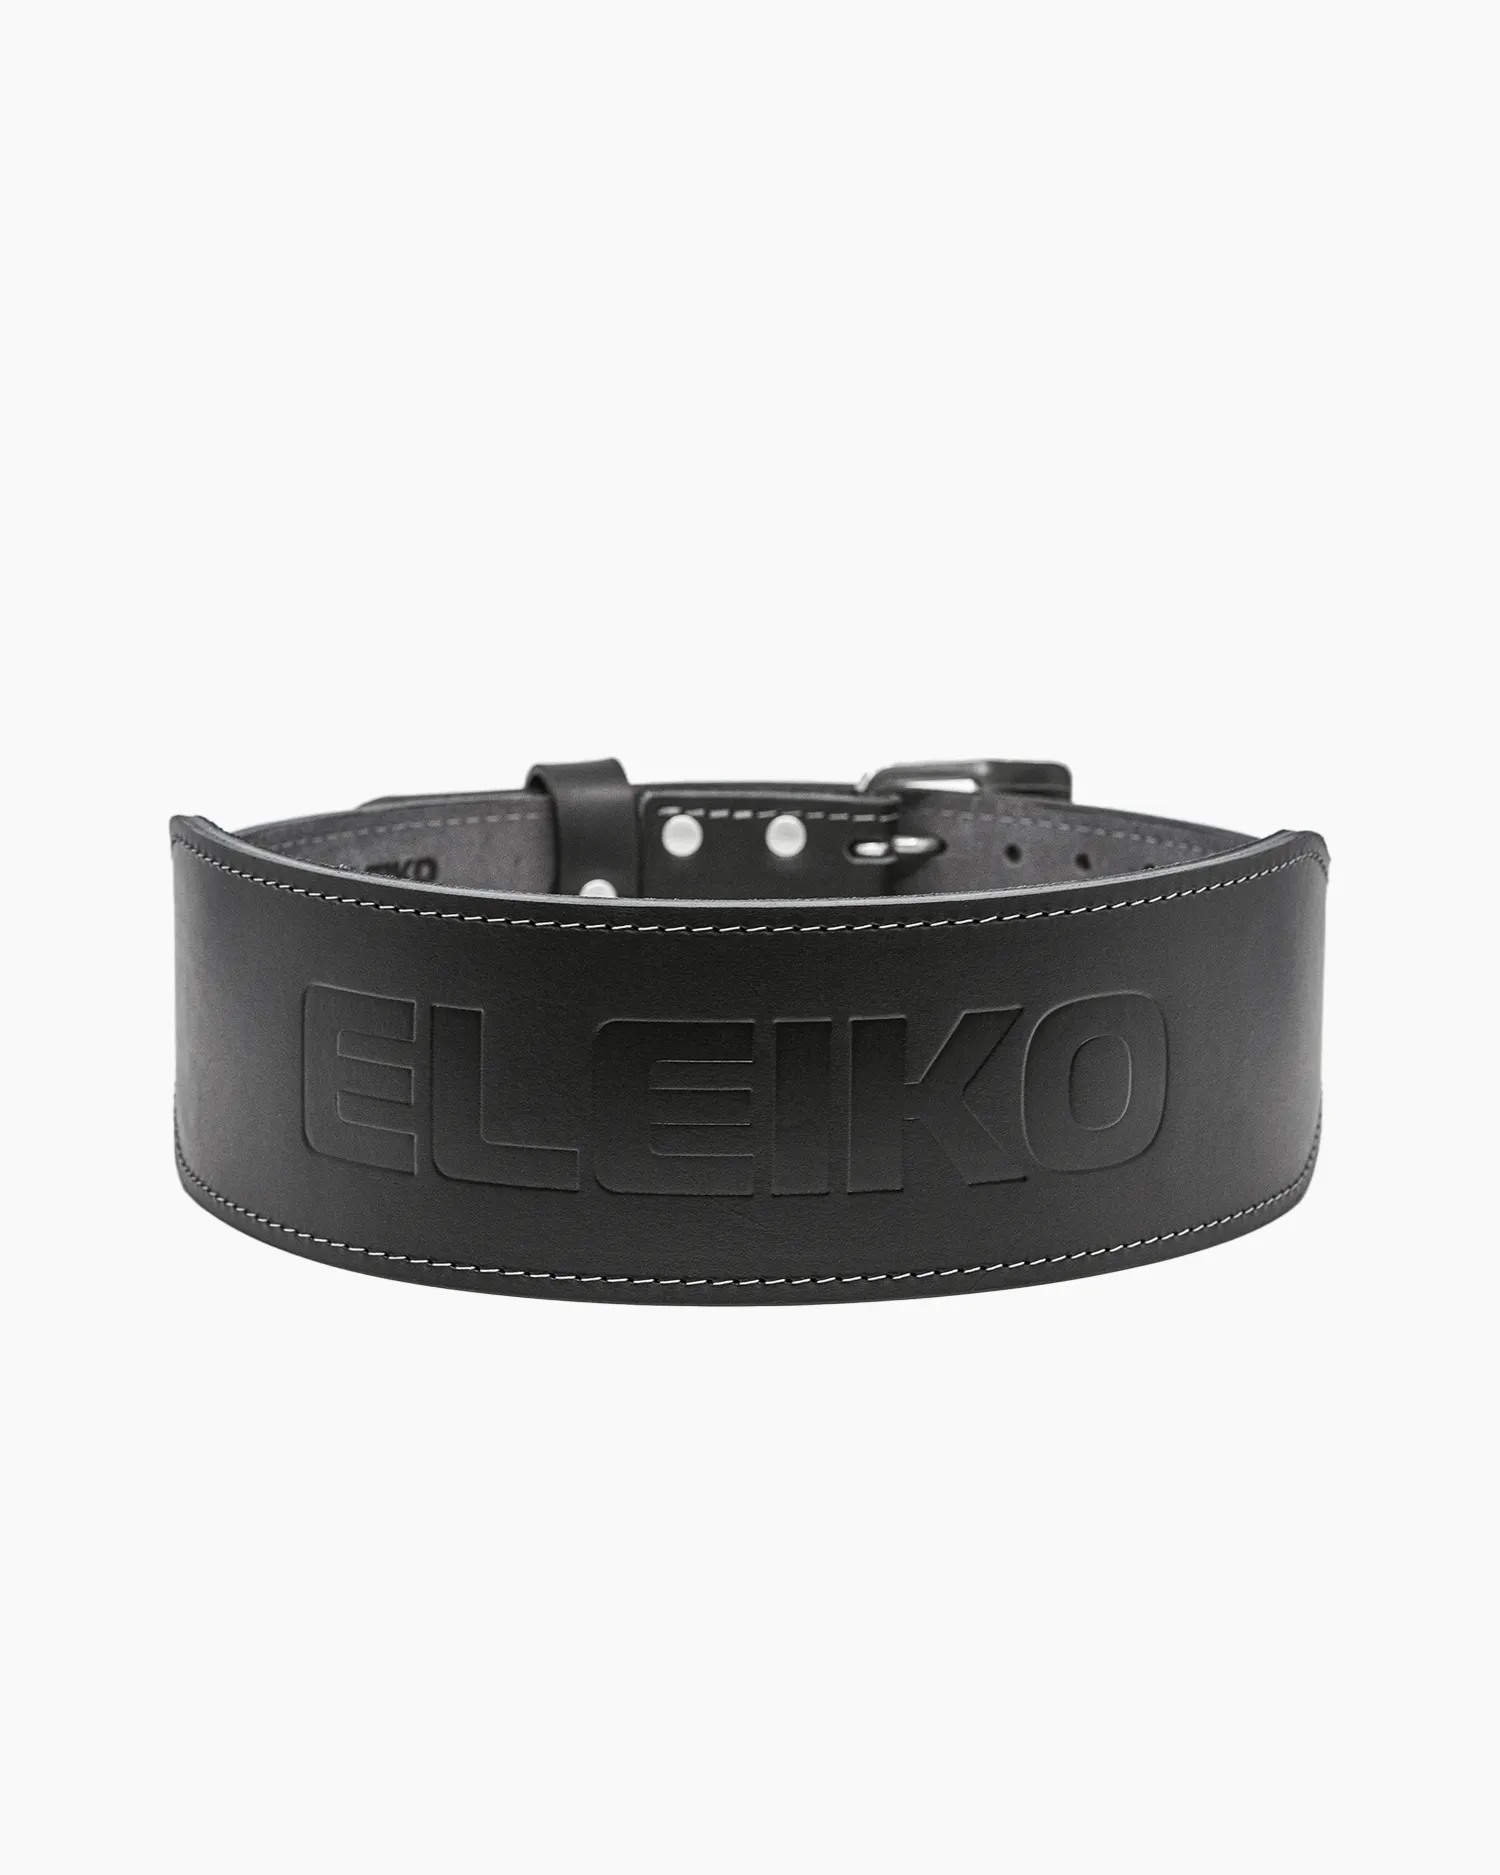 Eleiko Weightlifting Leather Belt